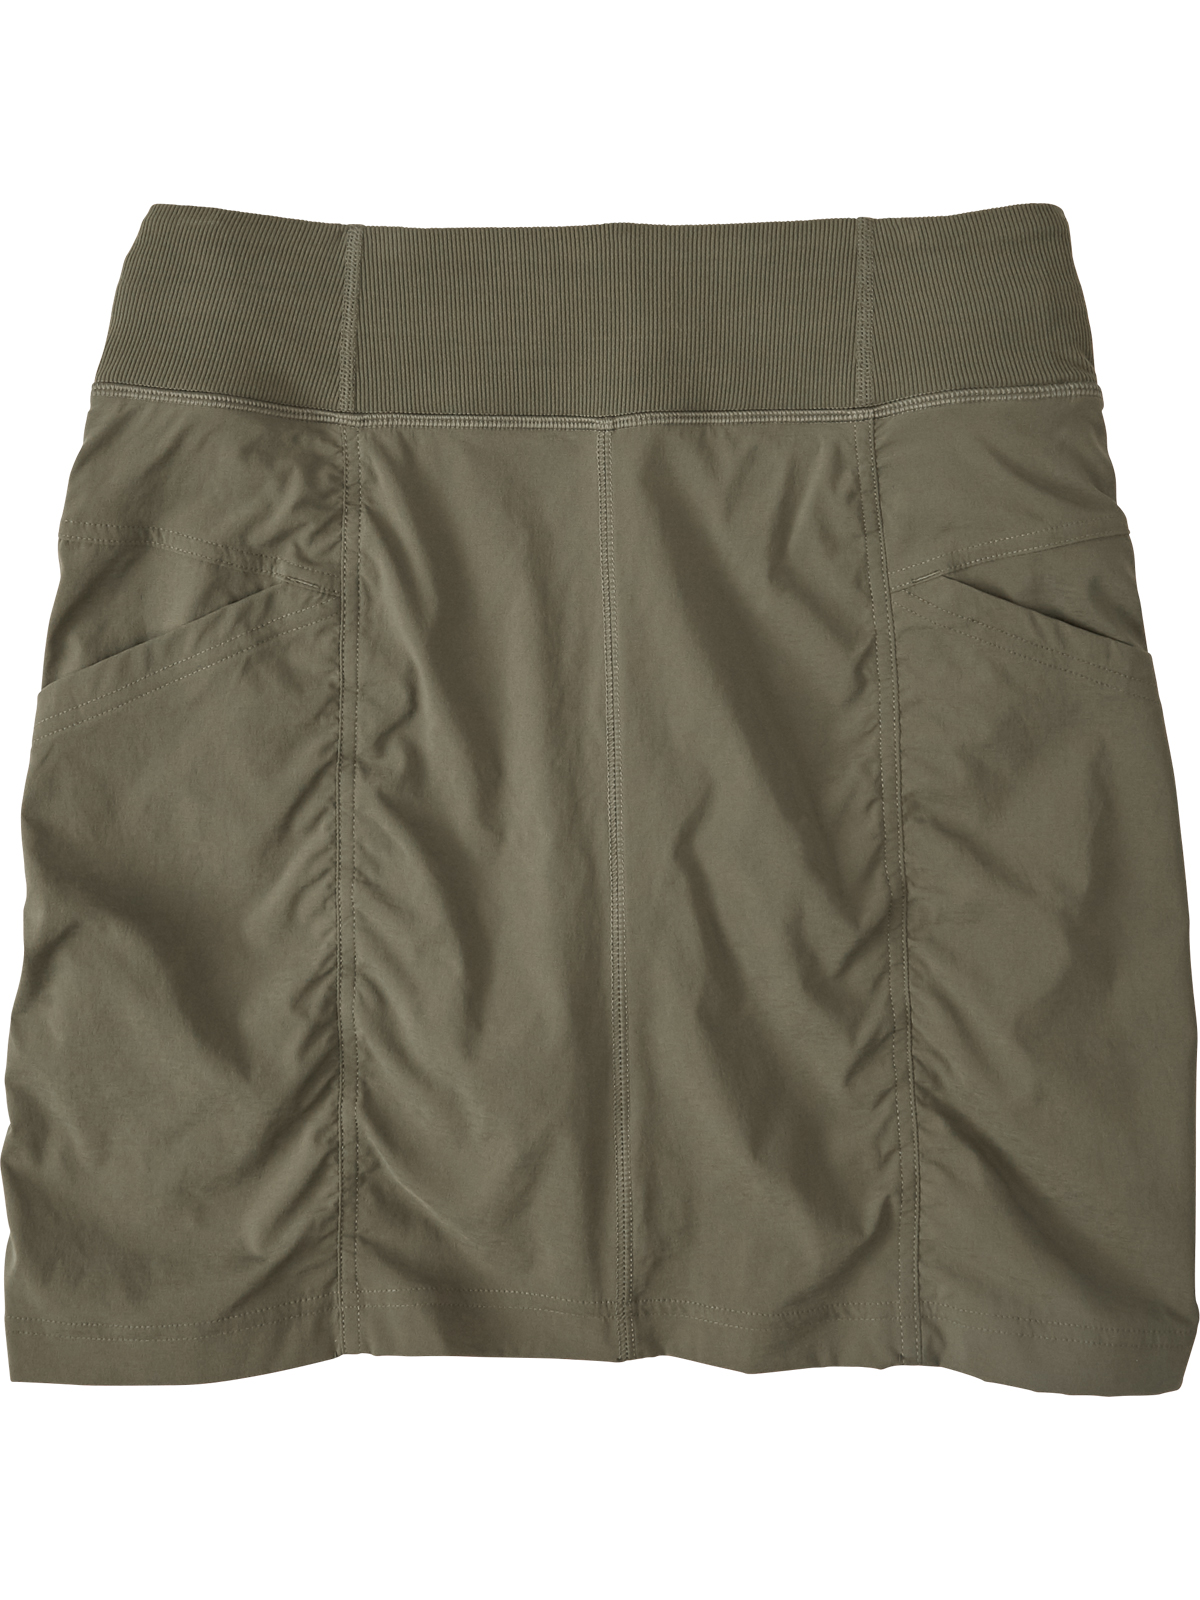 Evergreen Hiking Shorts 9.5